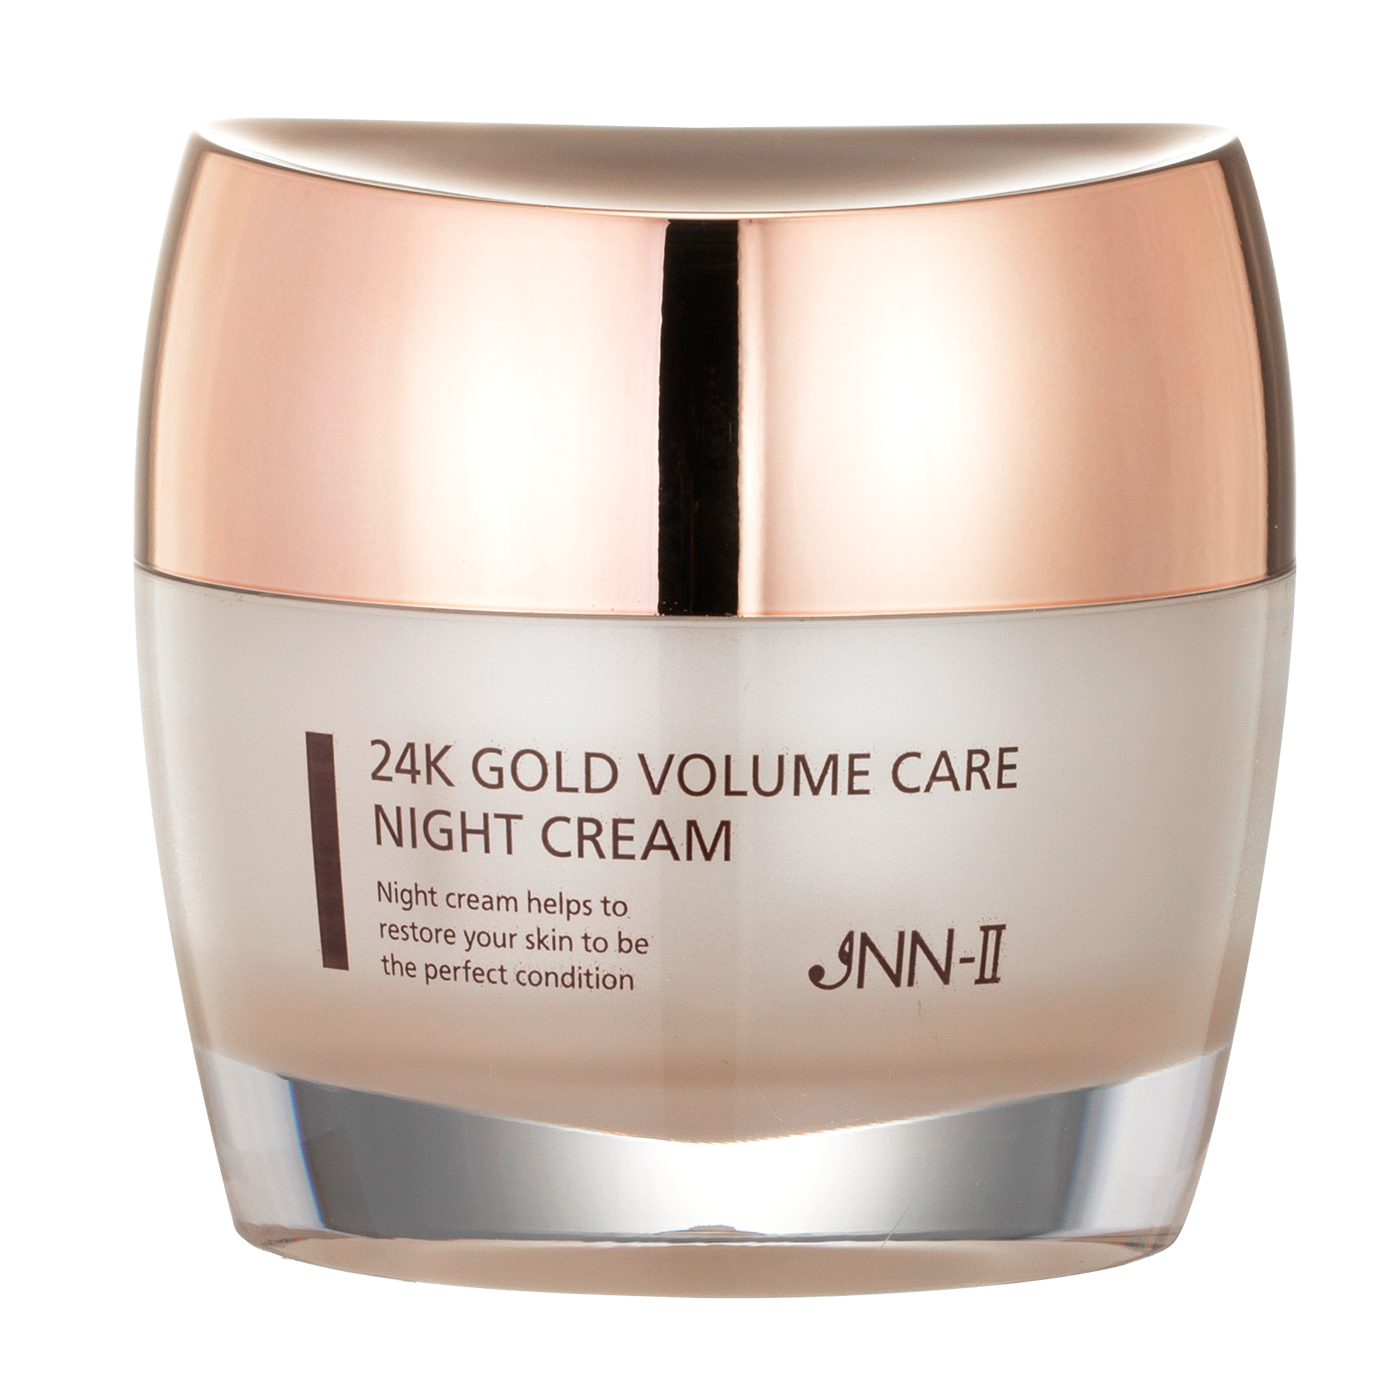 JNTU 24k Gold Volume Care Night Cream 50g / Skin Condition Recovery